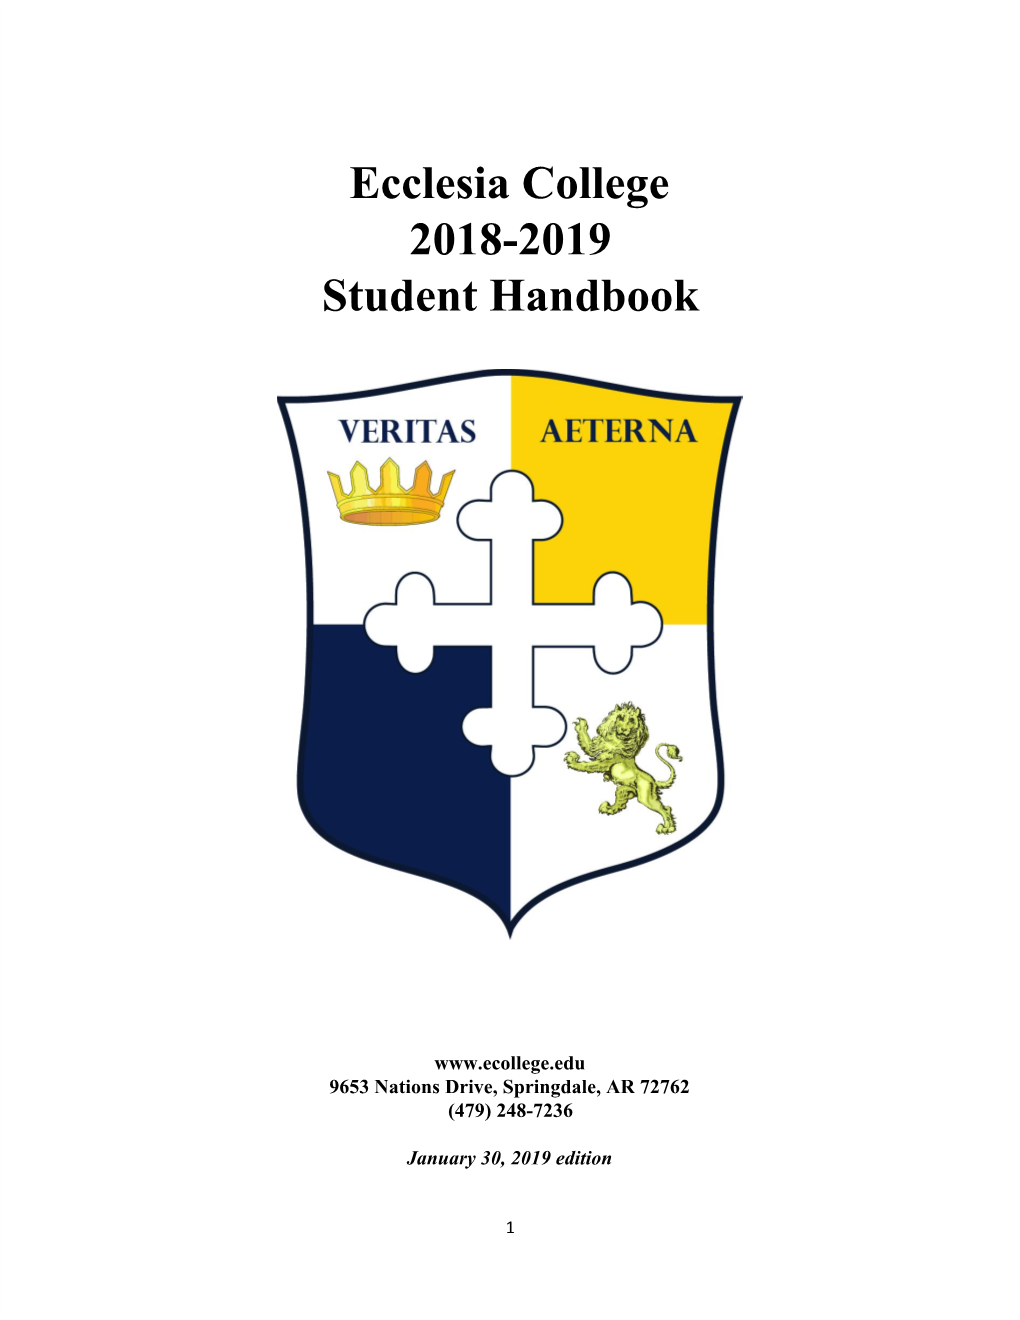 Ecclesia College 2018-2019 Student Handbook